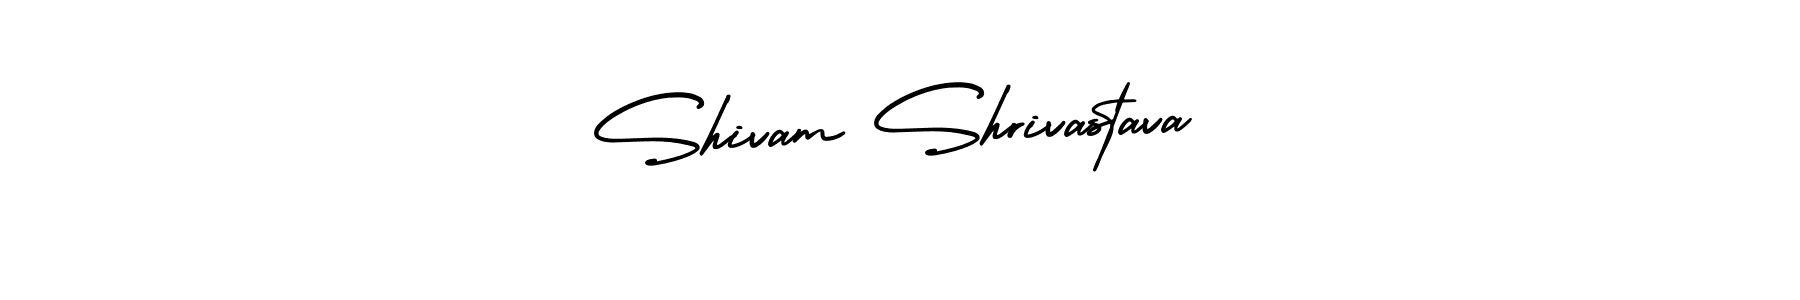 Use a signature maker to create a handwritten signature online. With this signature software, you can design (AmerikaSignatureDemo-Regular) your own signature for name Shivam Shrivastava. Shivam Shrivastava signature style 3 images and pictures png